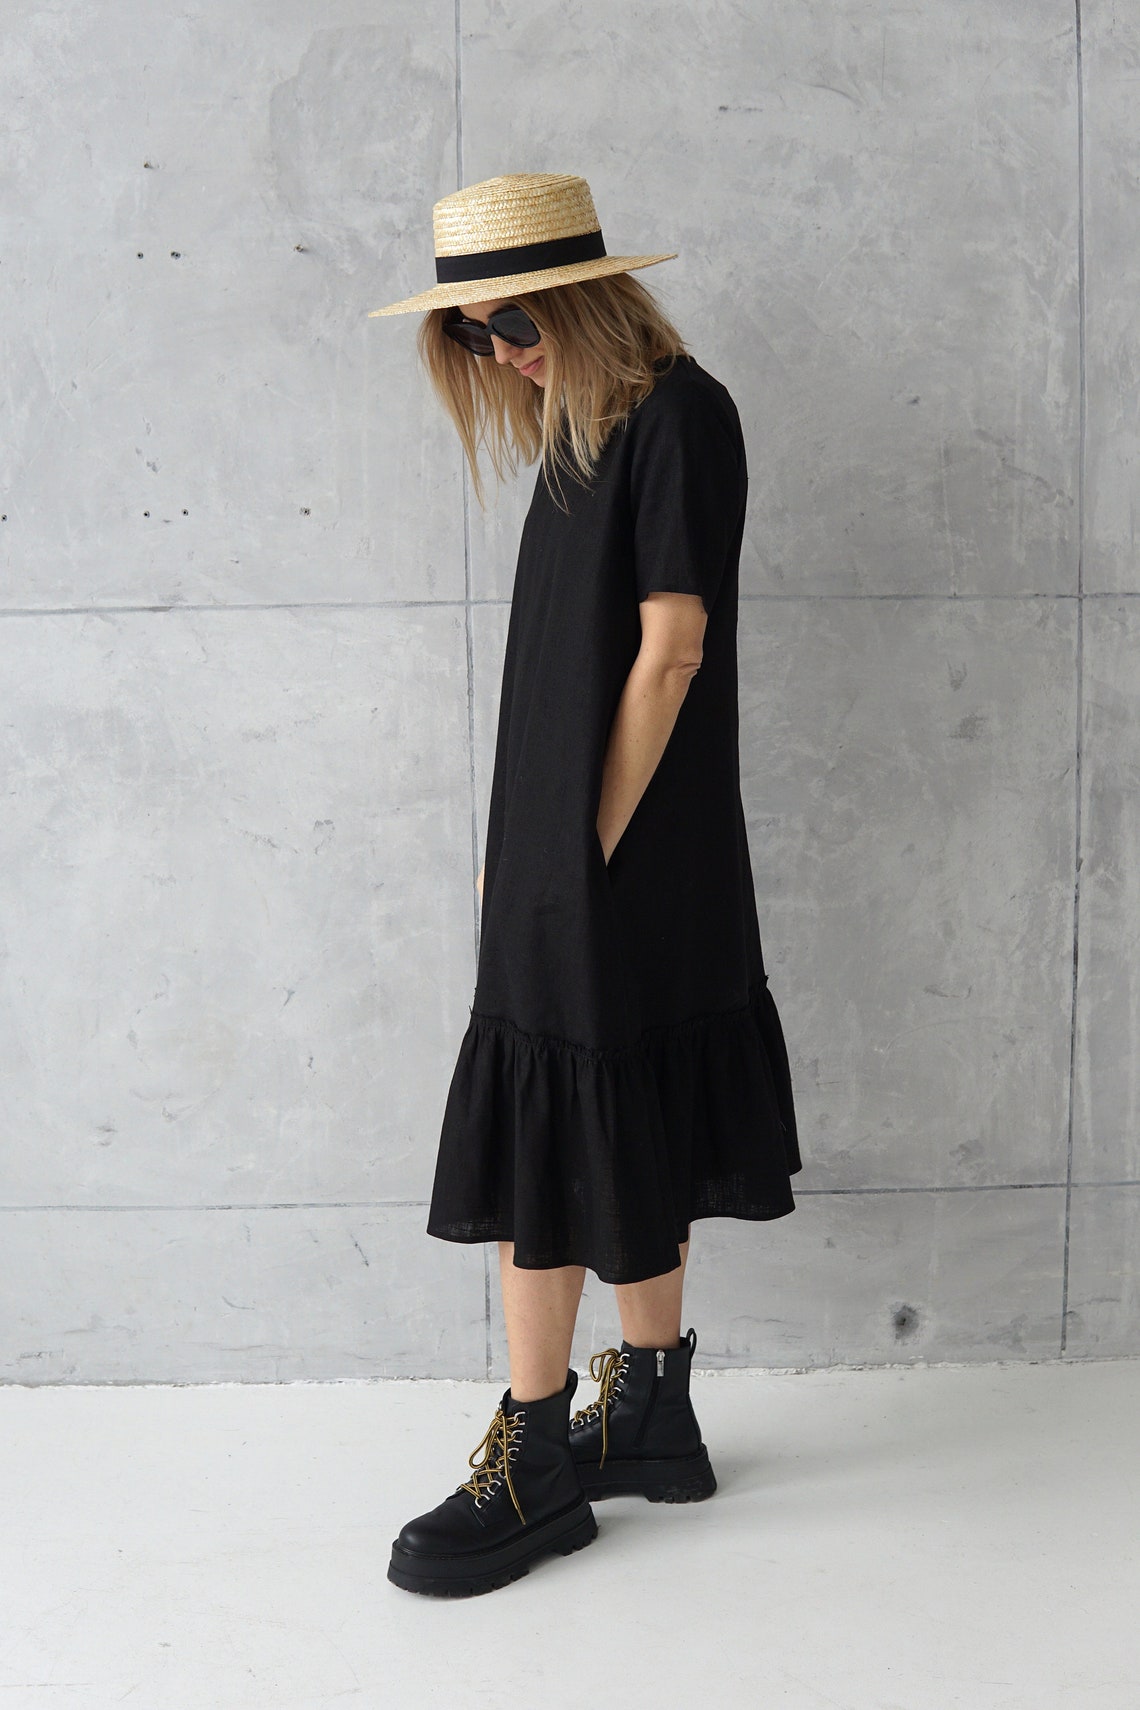 Linen Tunic / Black Linen Dress / Midi Linen Dress / Linen - Etsy